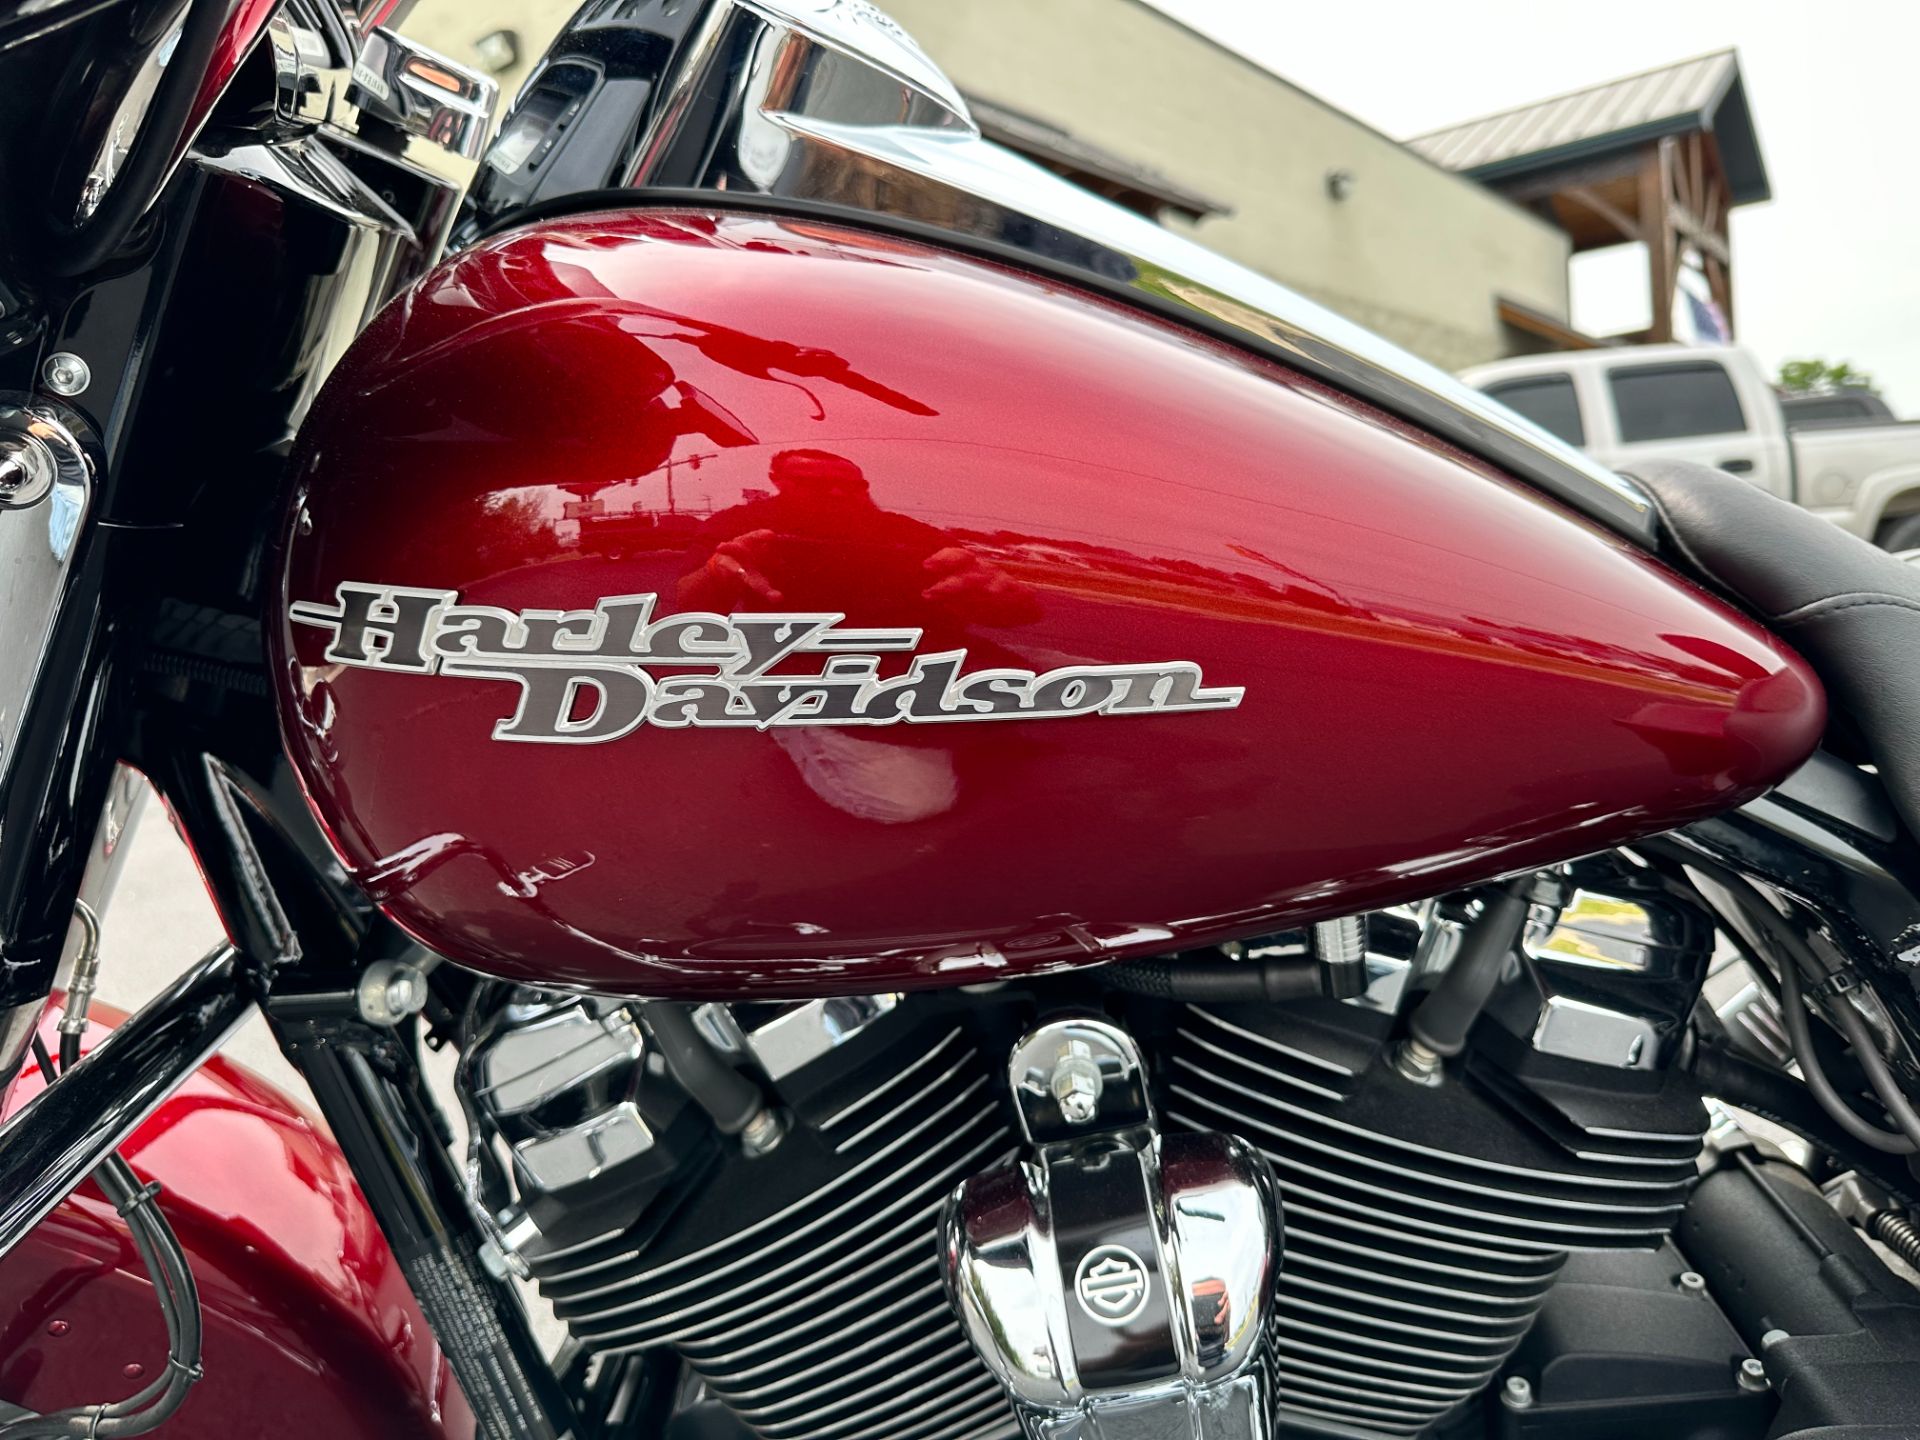 2017 Harley-Davidson Street Glide® Special in Lynchburg, Virginia - Photo 20